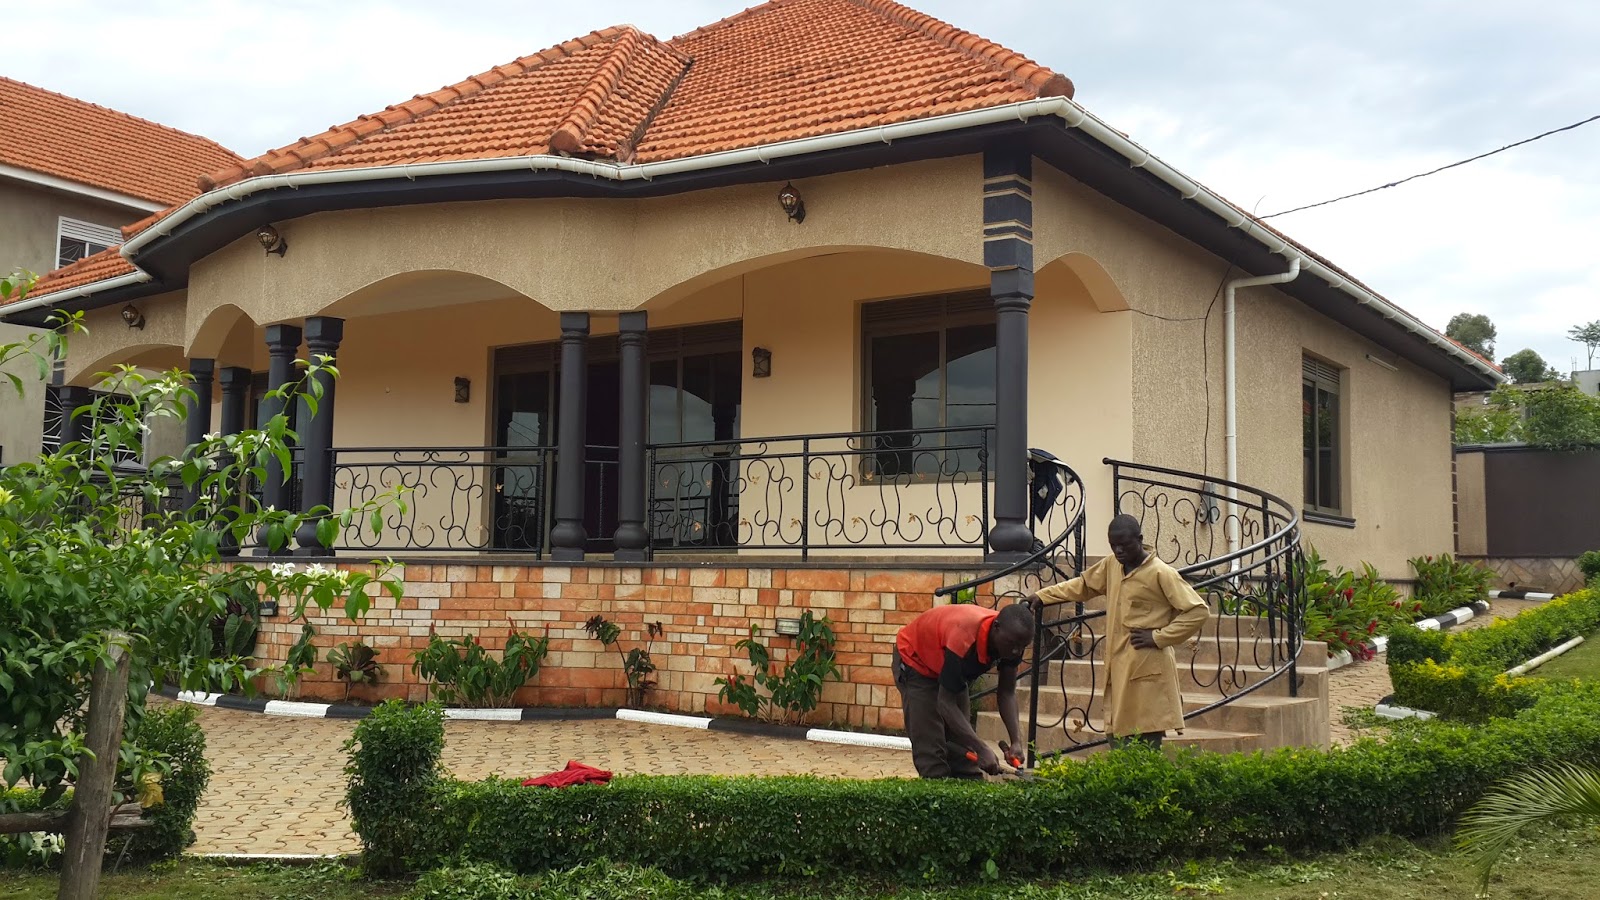 HOUSES FOR SALE KAMPALA, UGANDA HOUSE FOR SALE FOR SALE